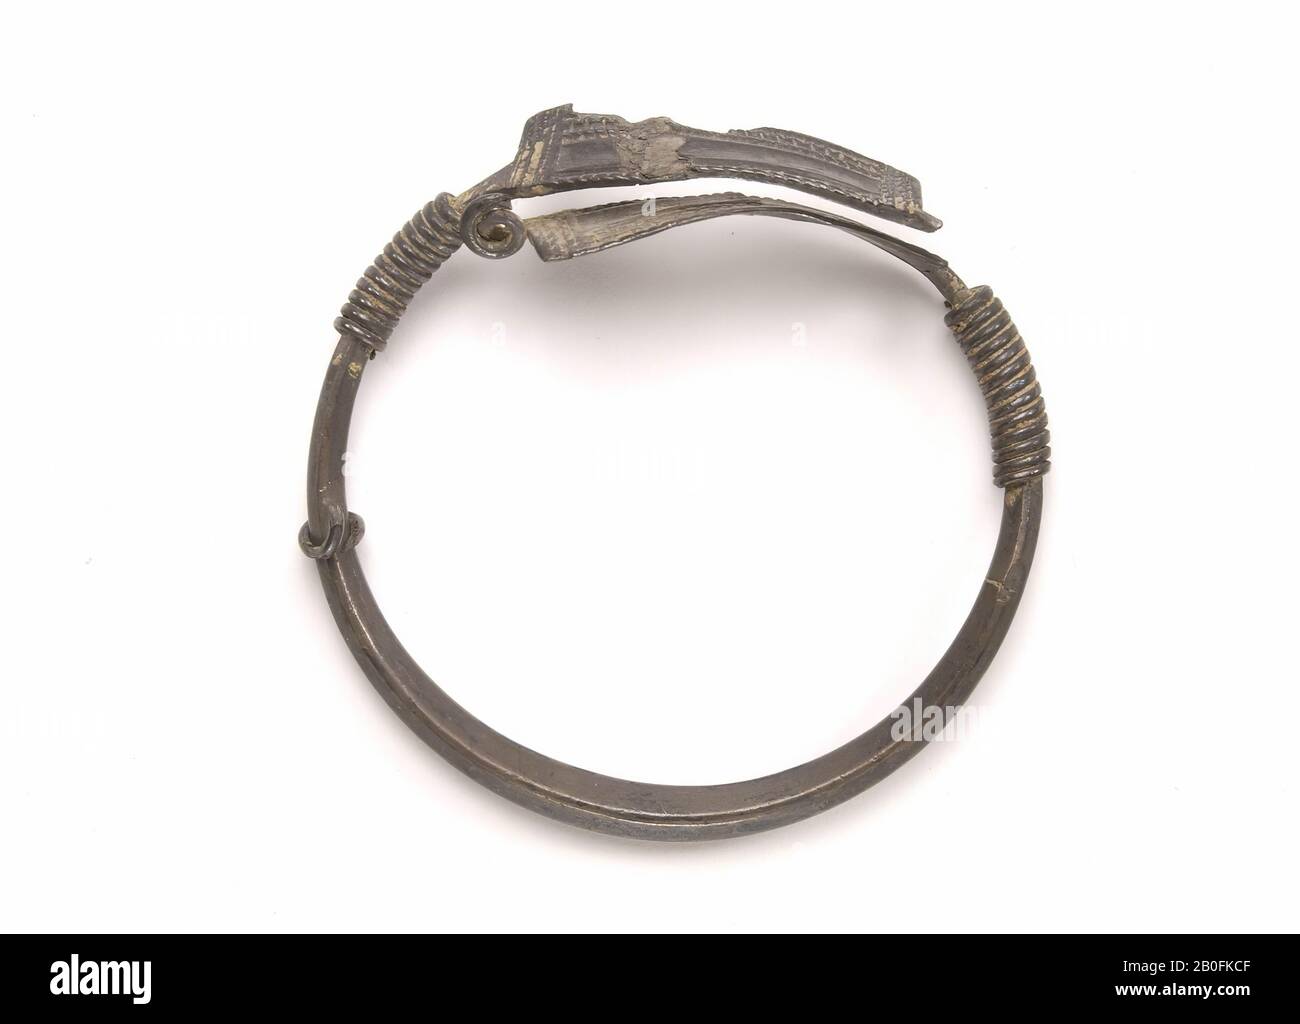 Sold at Auction: Georg Jensen, G. Jensen & V. Torun Silver Neck Ring w/  Quartz